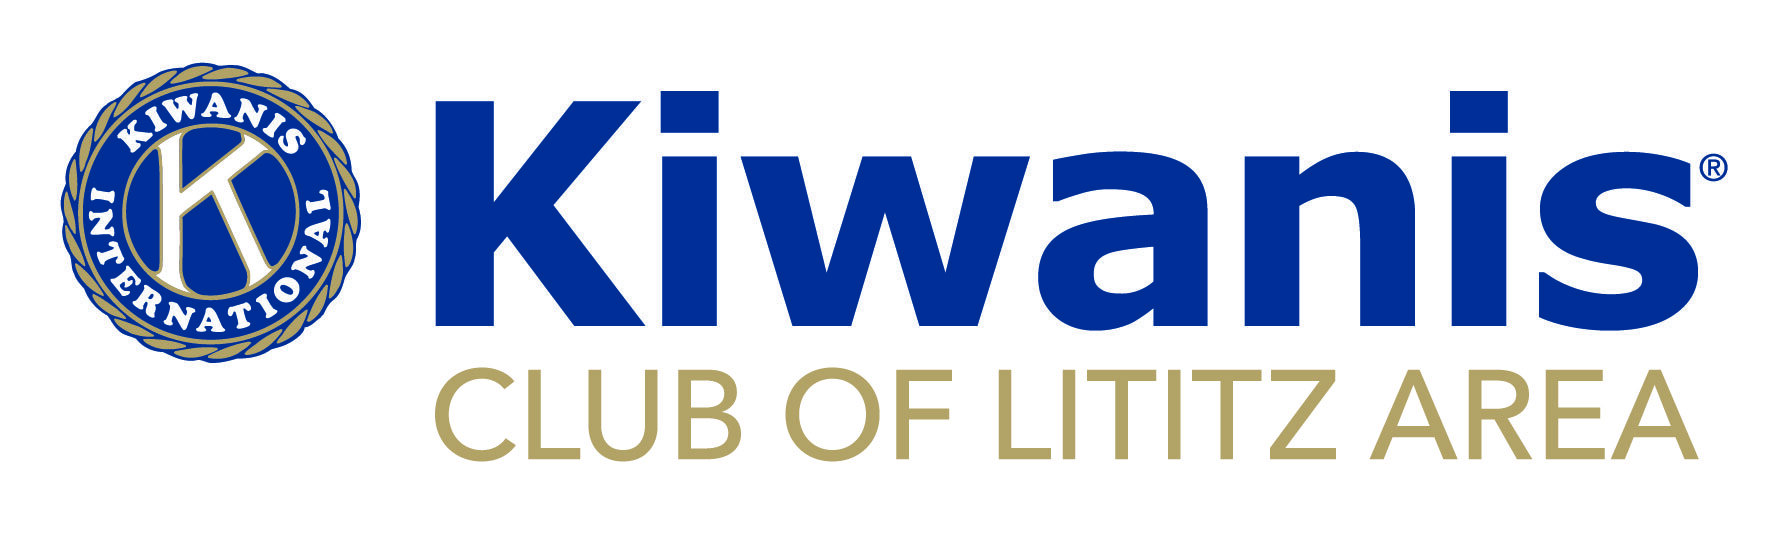 Kiwanis Club of the Lititz Area